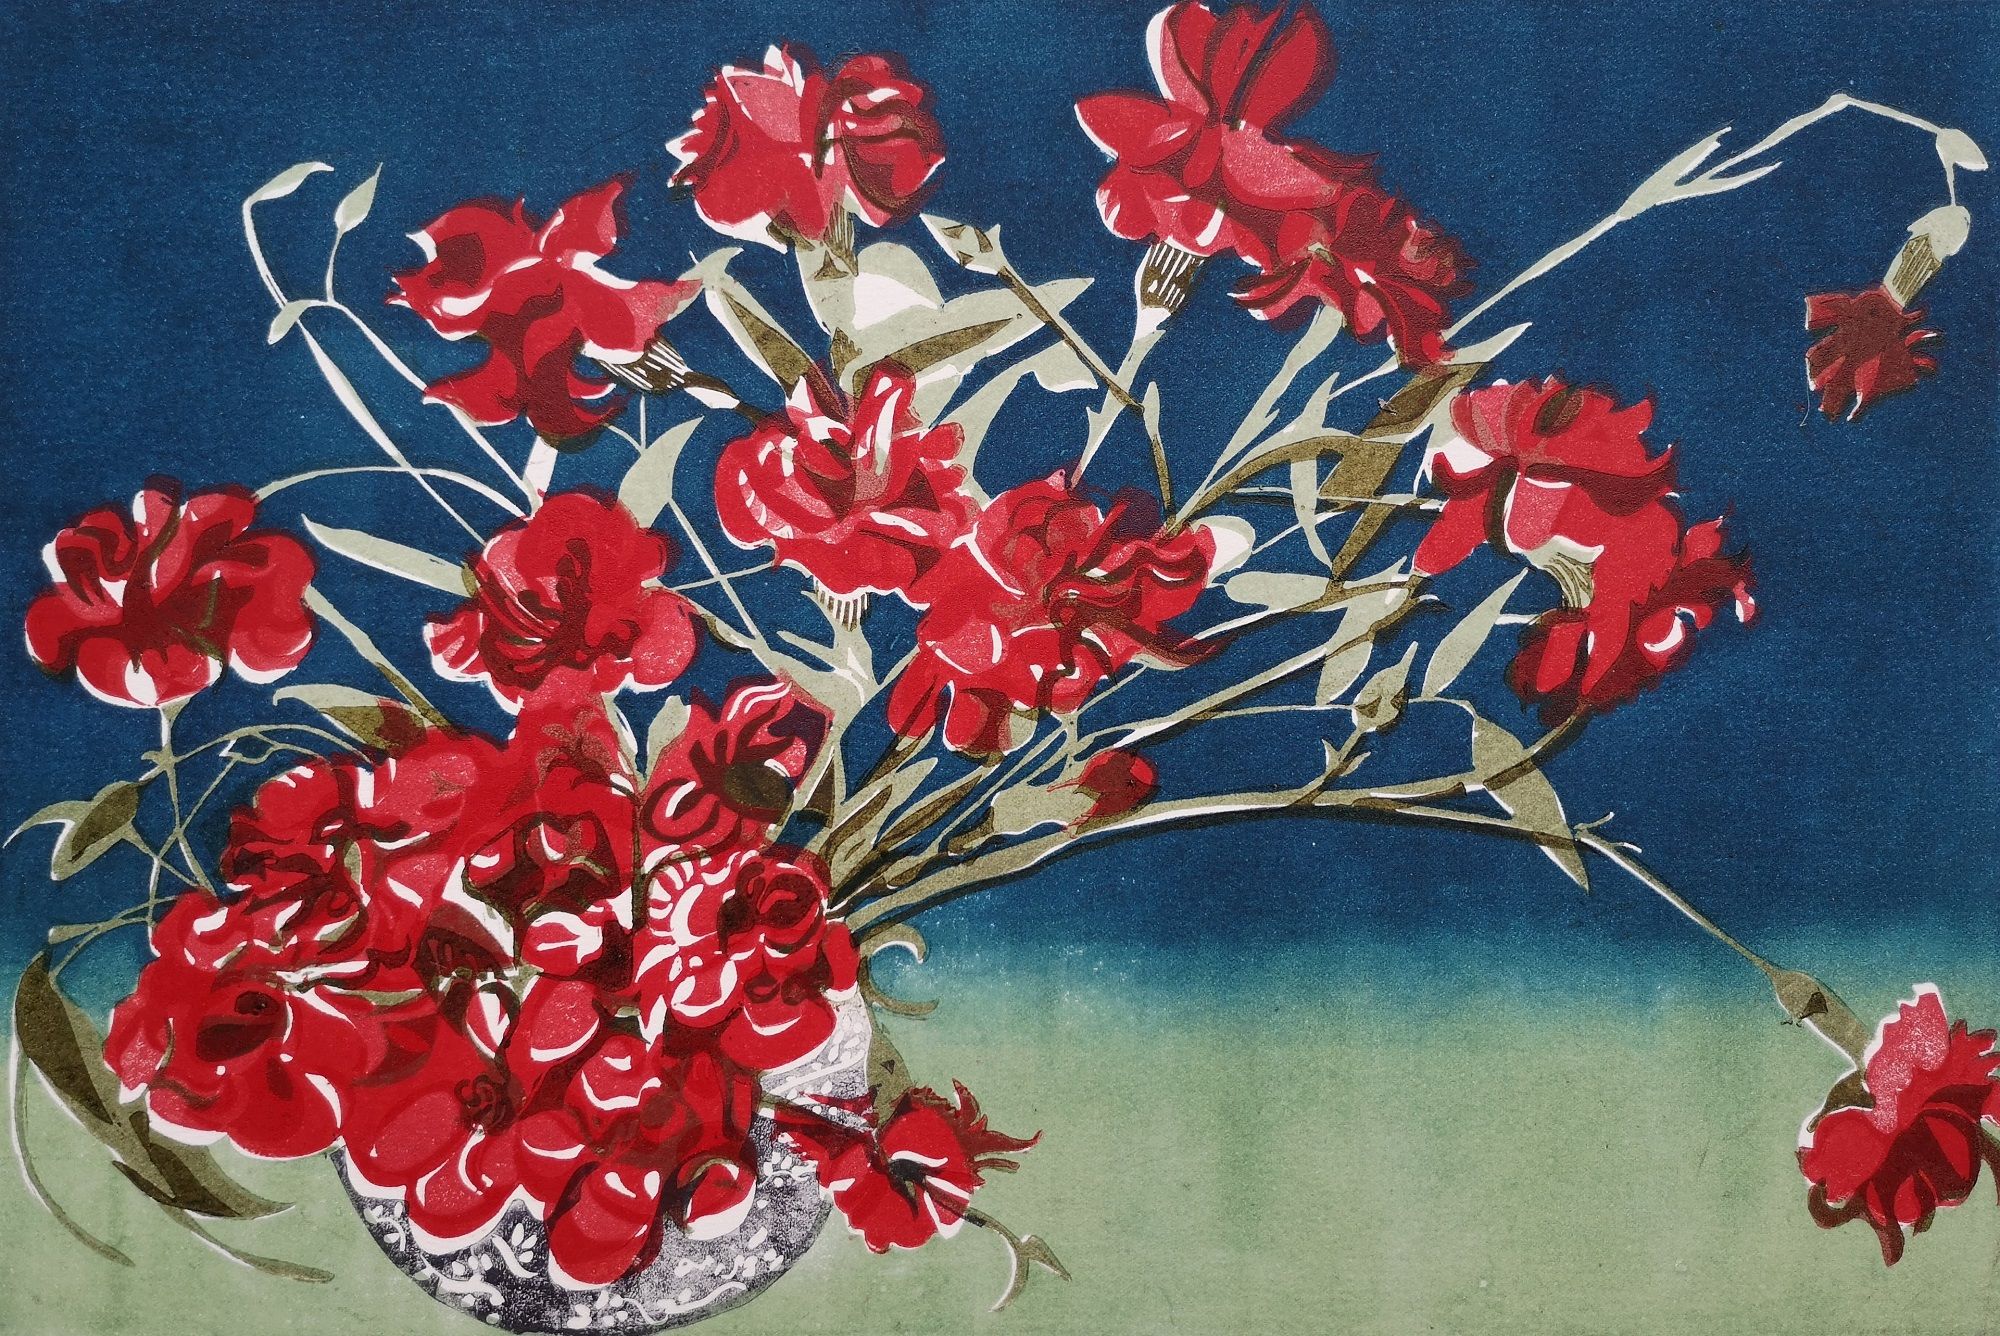 Carnations by Lisa Takahashi